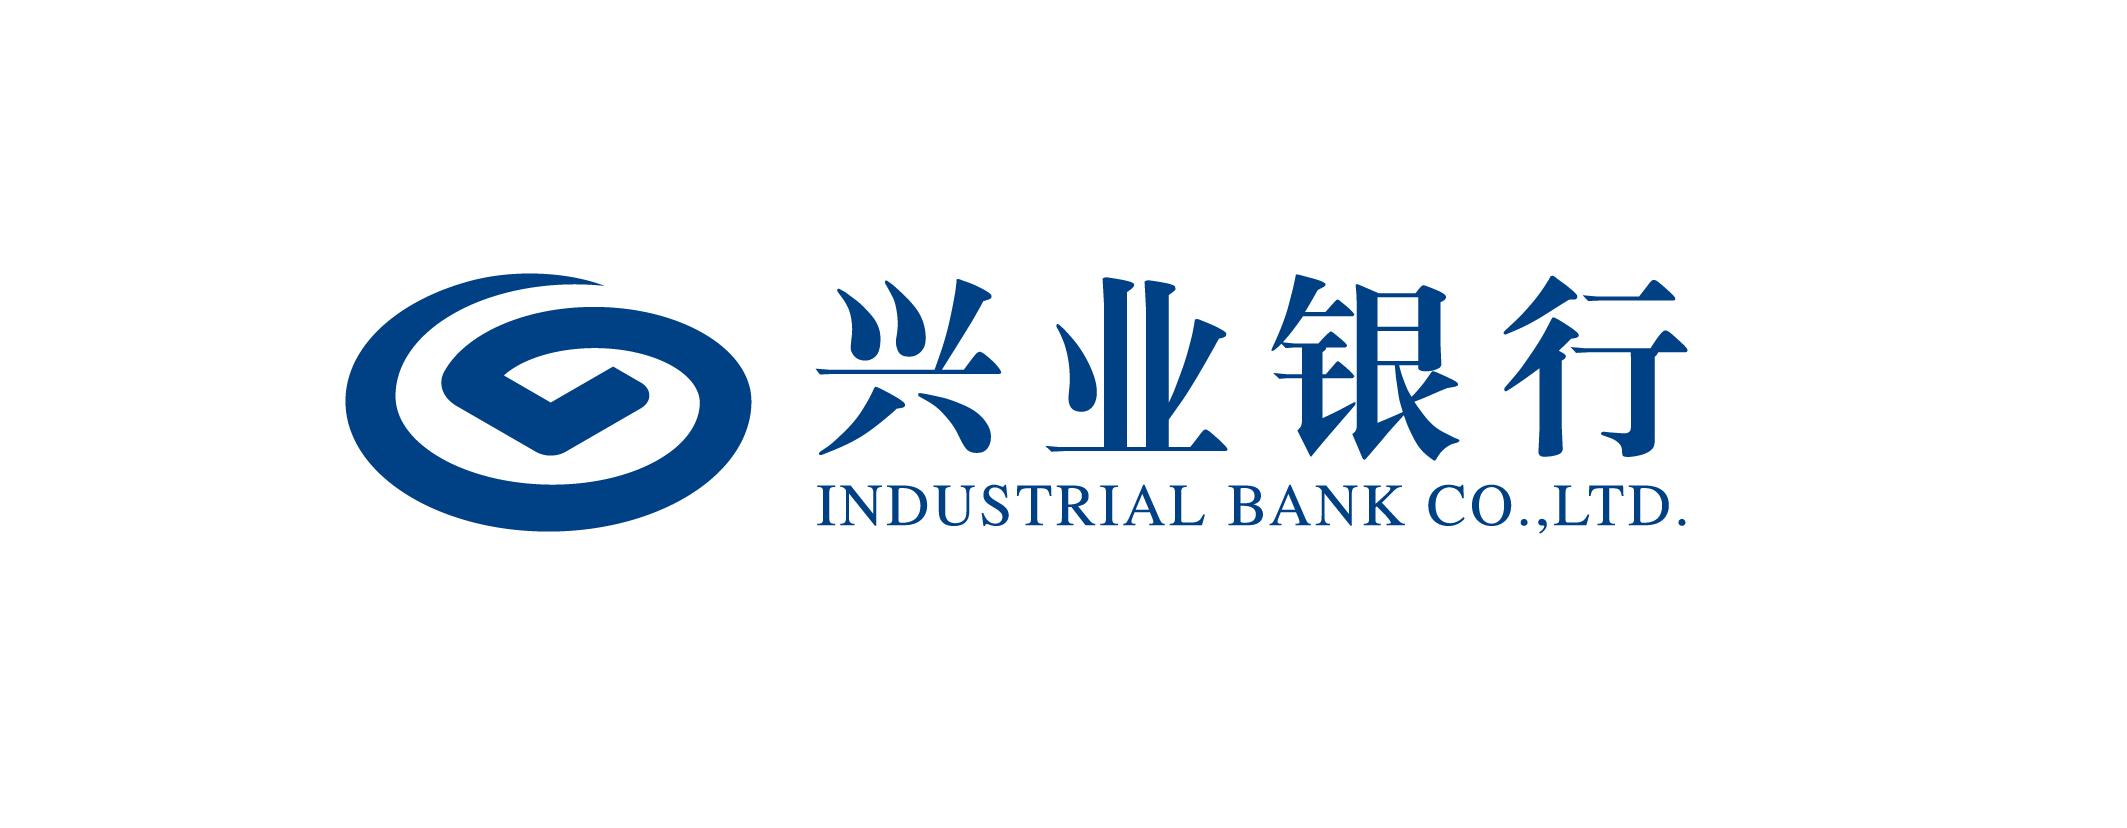 Chouzhou commercial bank co ltd. Industrial Bank. Industrial Bank co. Industrial Bank of Korea. ЕМВ логотип.